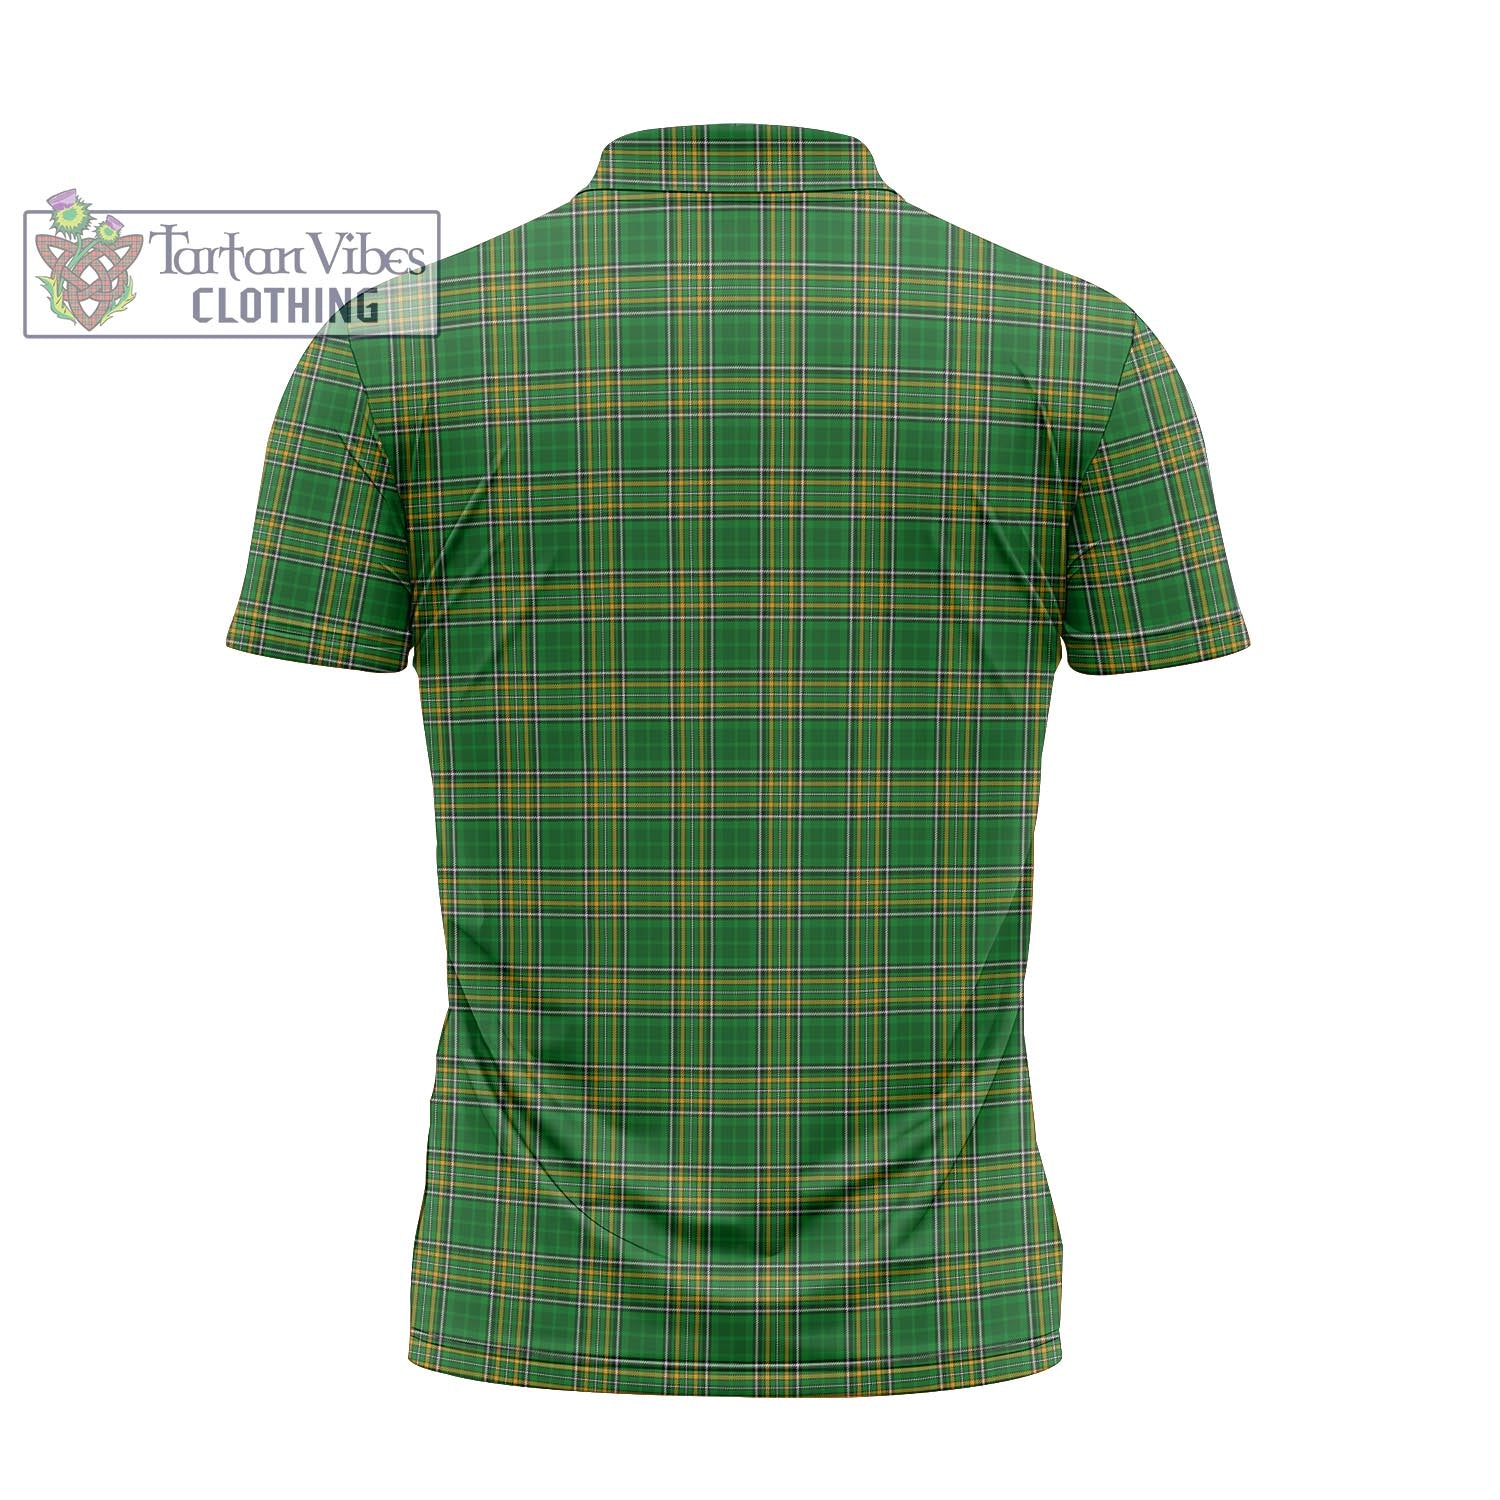 Tartan Vibes Clothing Ireland National Tartan Zipper Polo Shirt